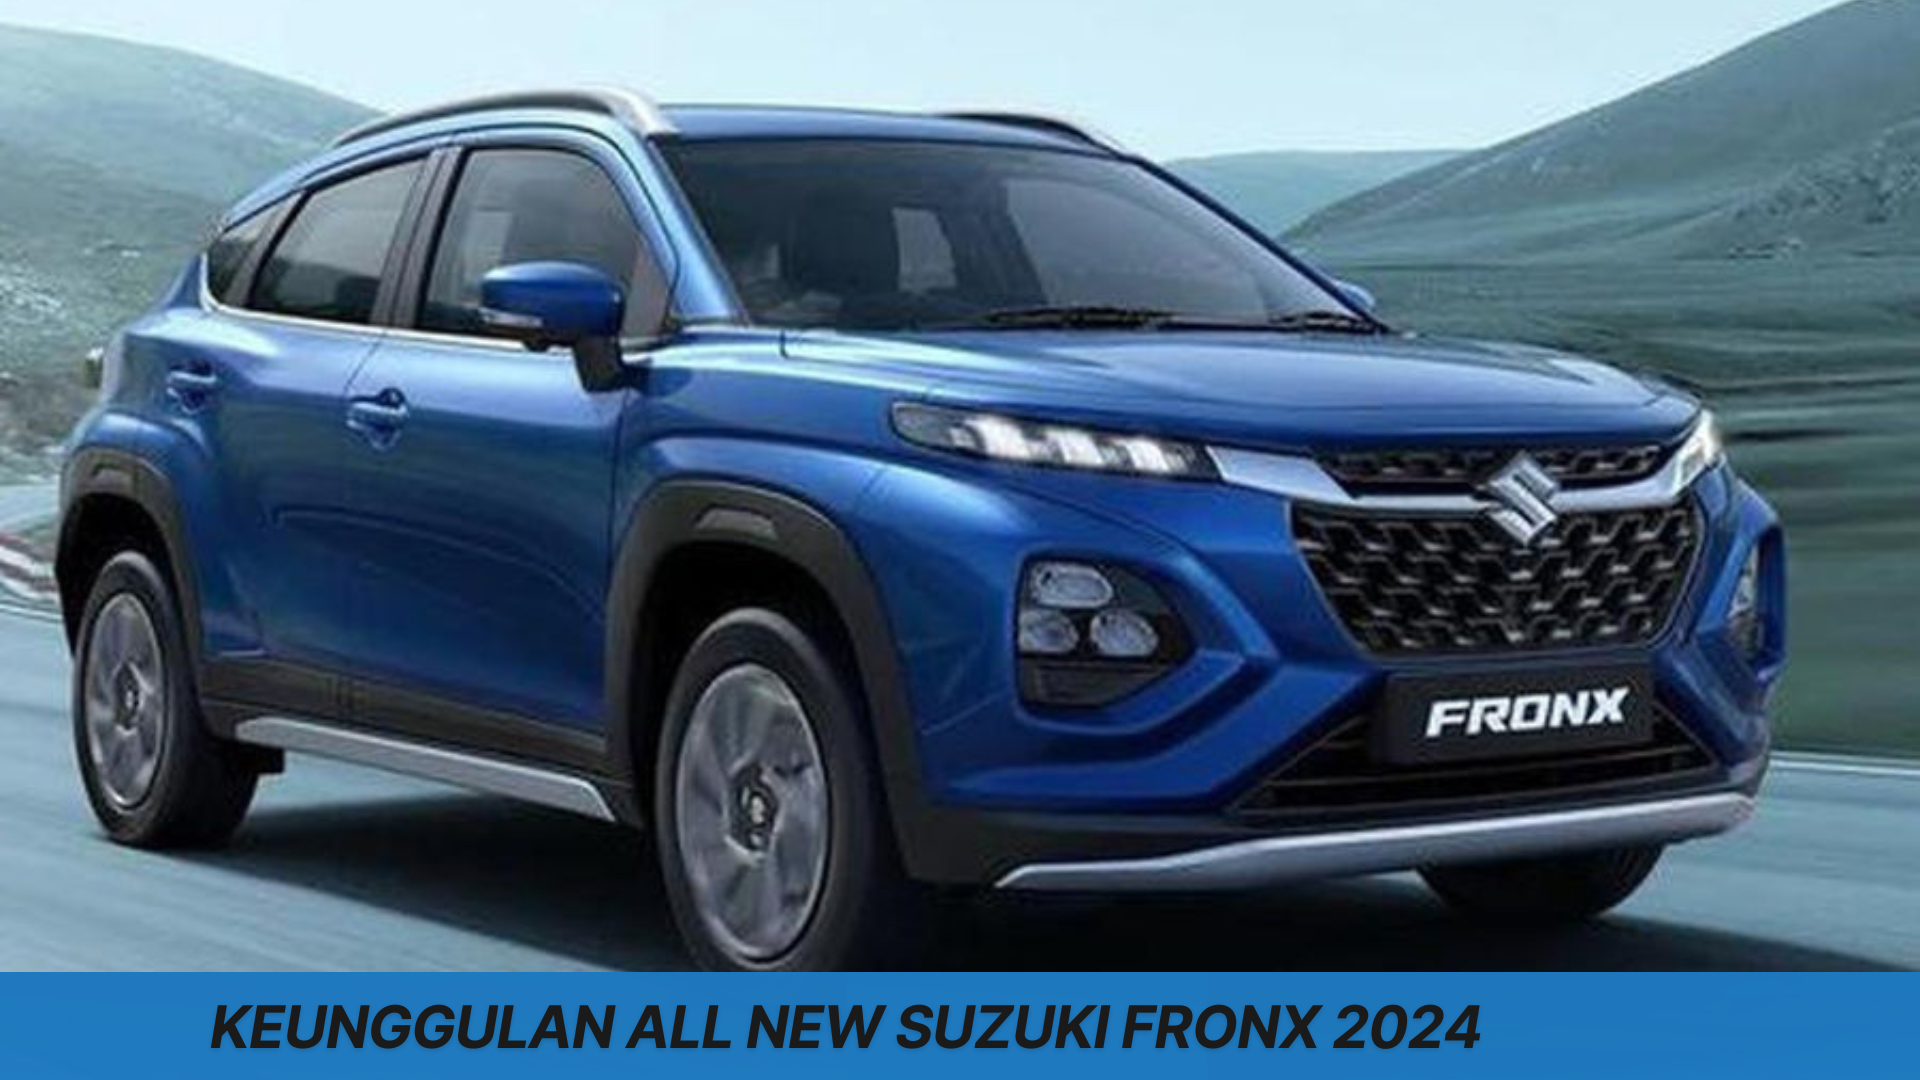 Keunggulan All New Suzuki Fronx 2024, Mobil yang Irit Bahan Bakar dengan Sistem Direct Injection